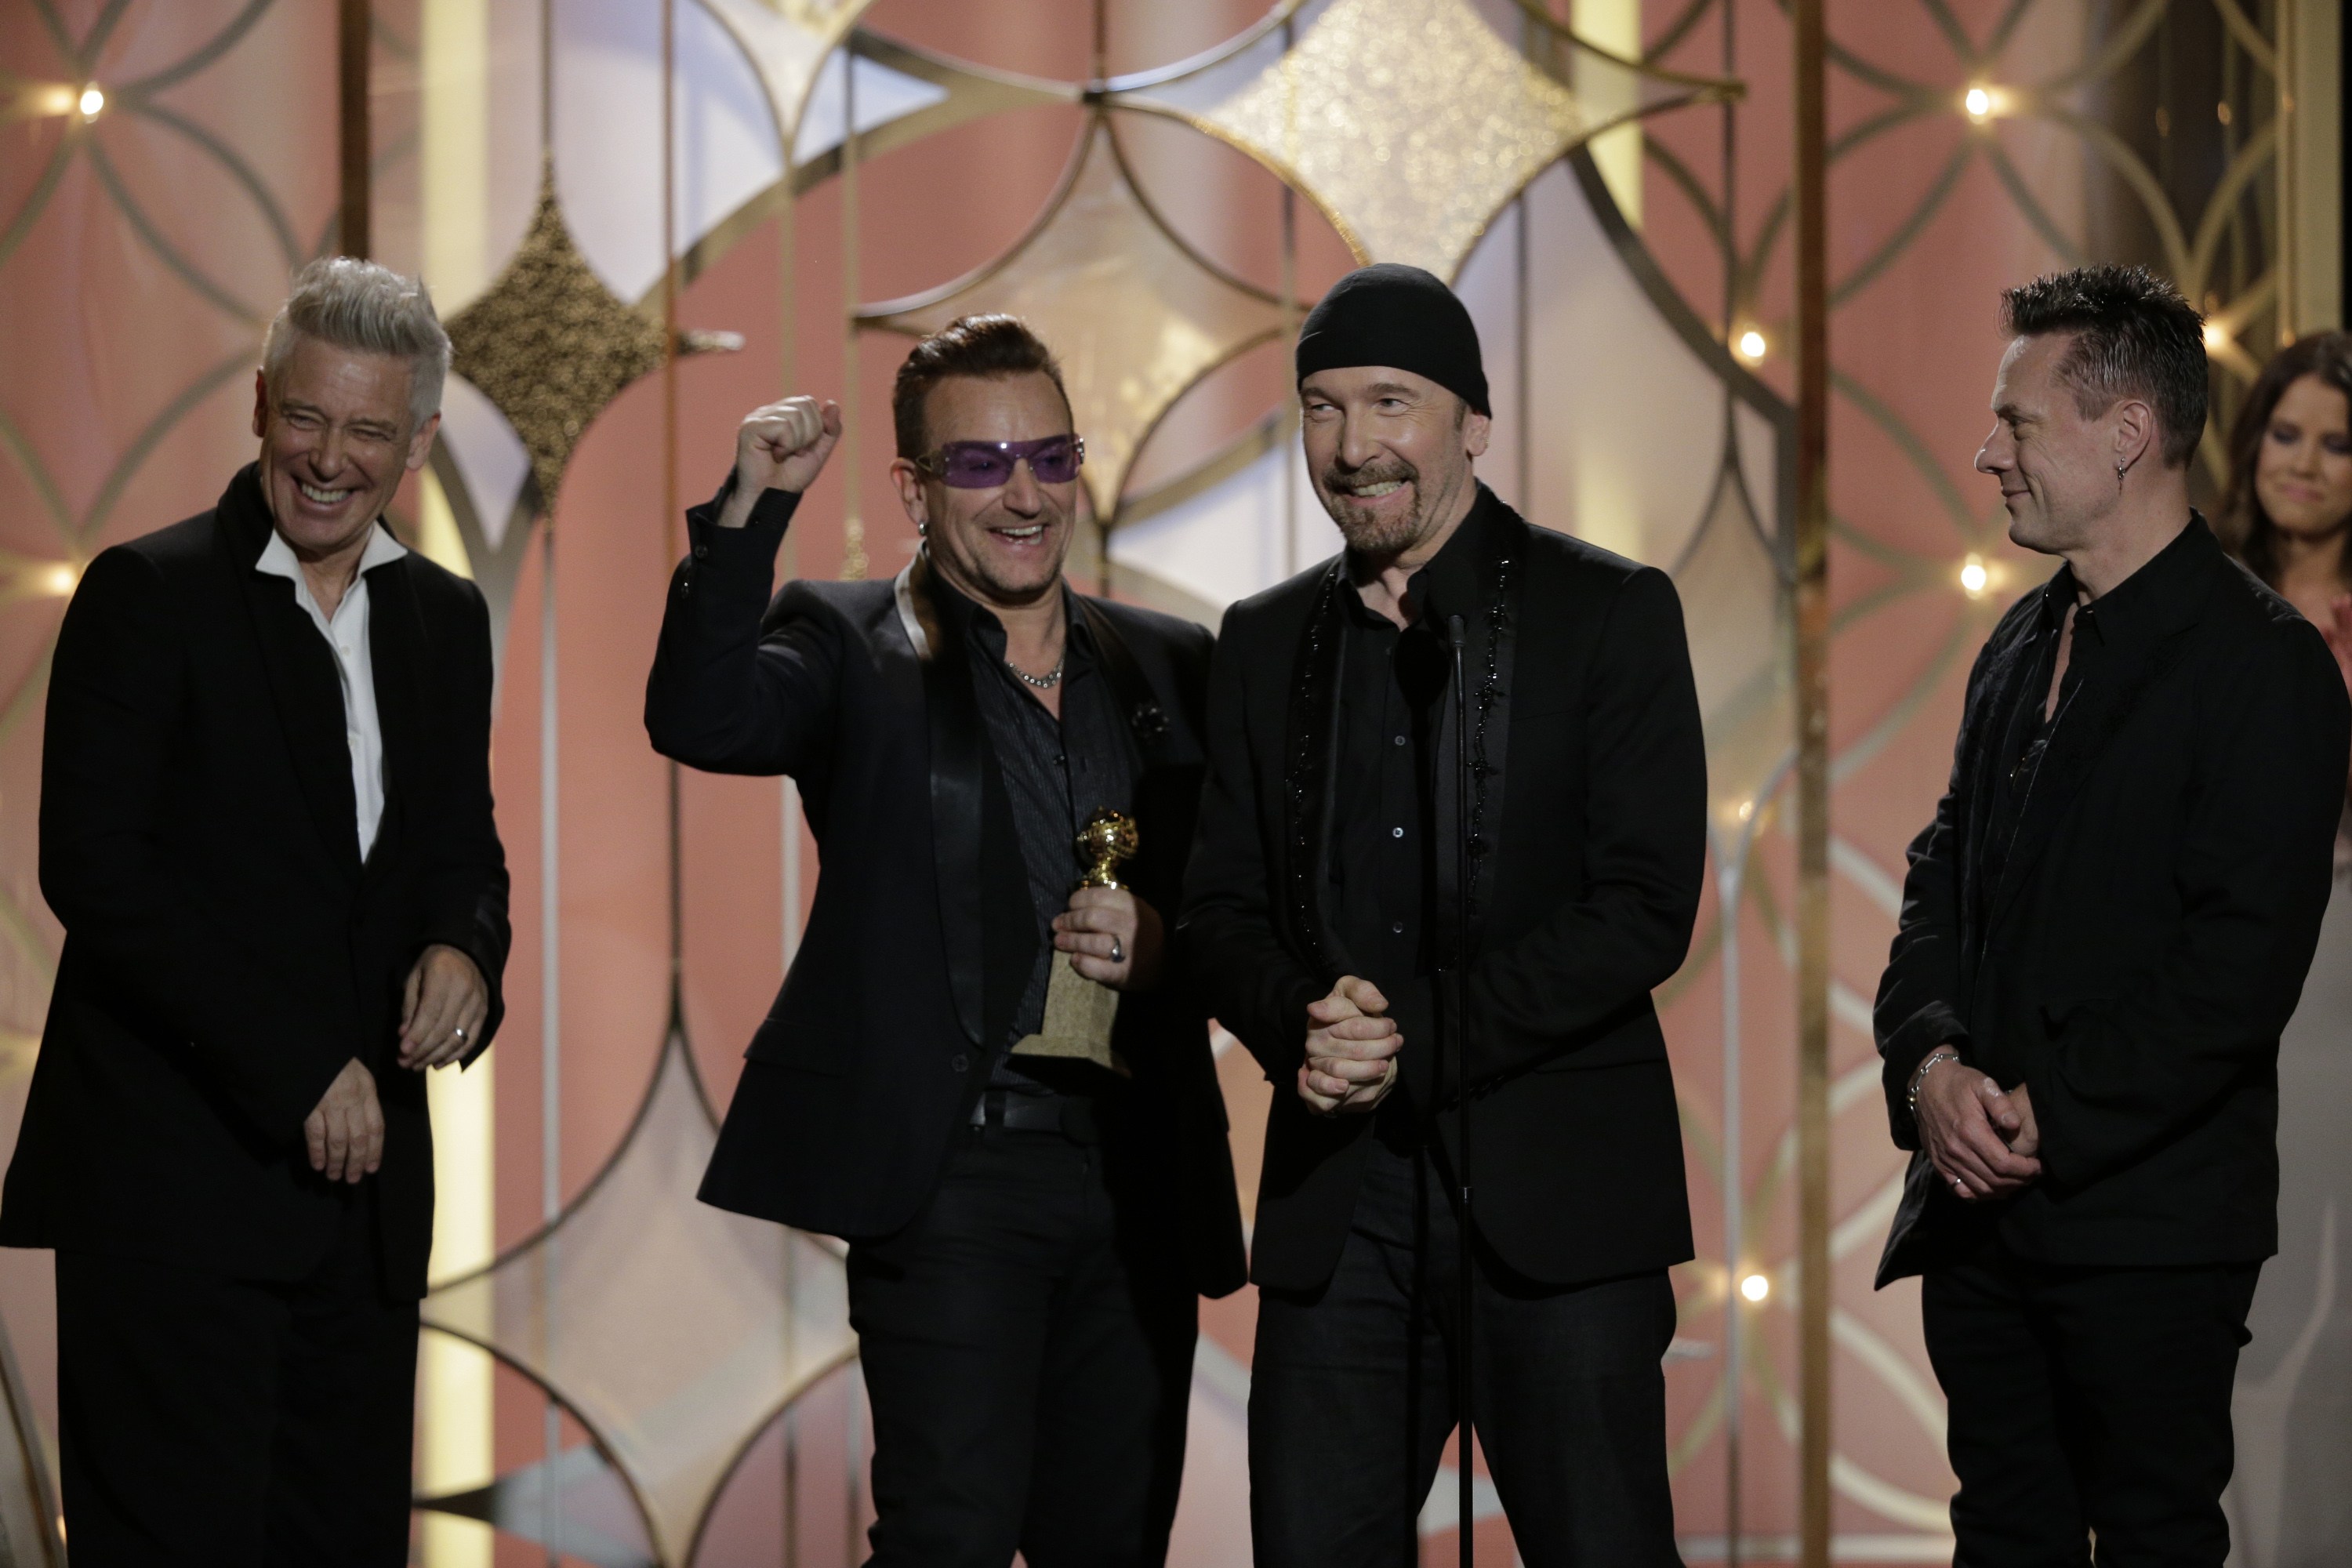 U2 CAPTURE GOLDEN GLOBE FOR BEST ORIGINAL SONG – MOTION PICTURE